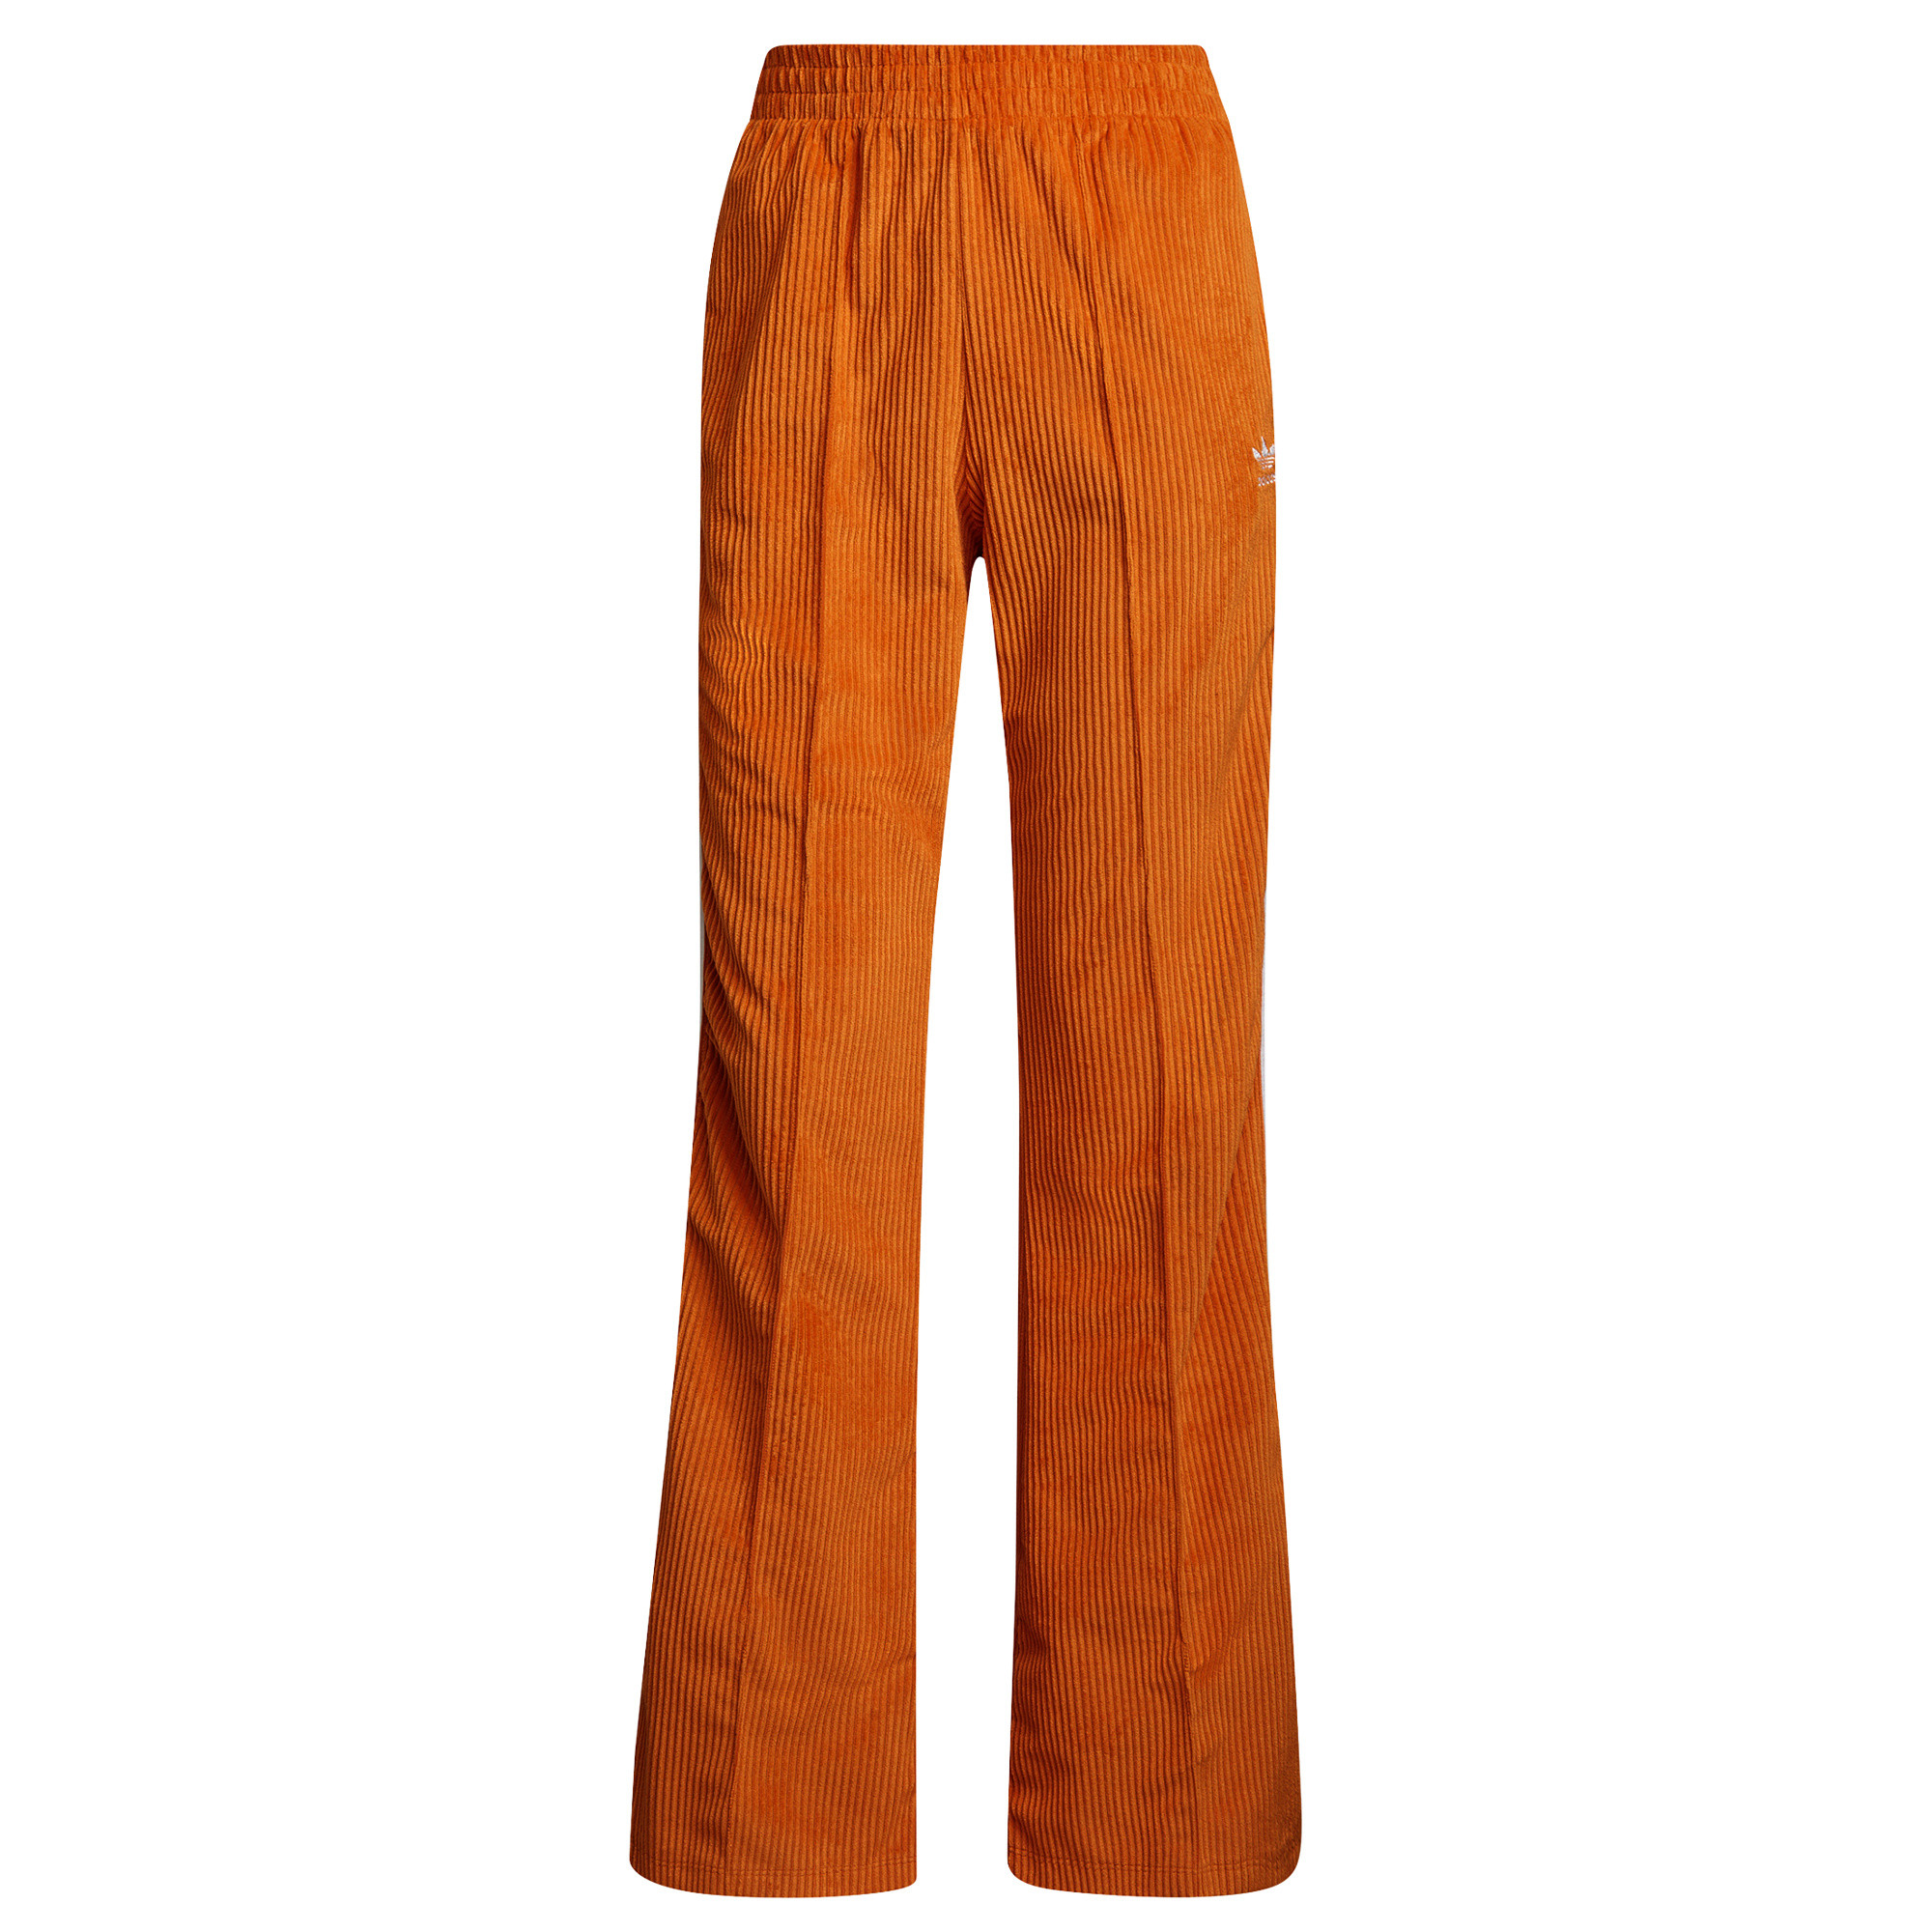 Relaxed Pant, Orange, large image number 0